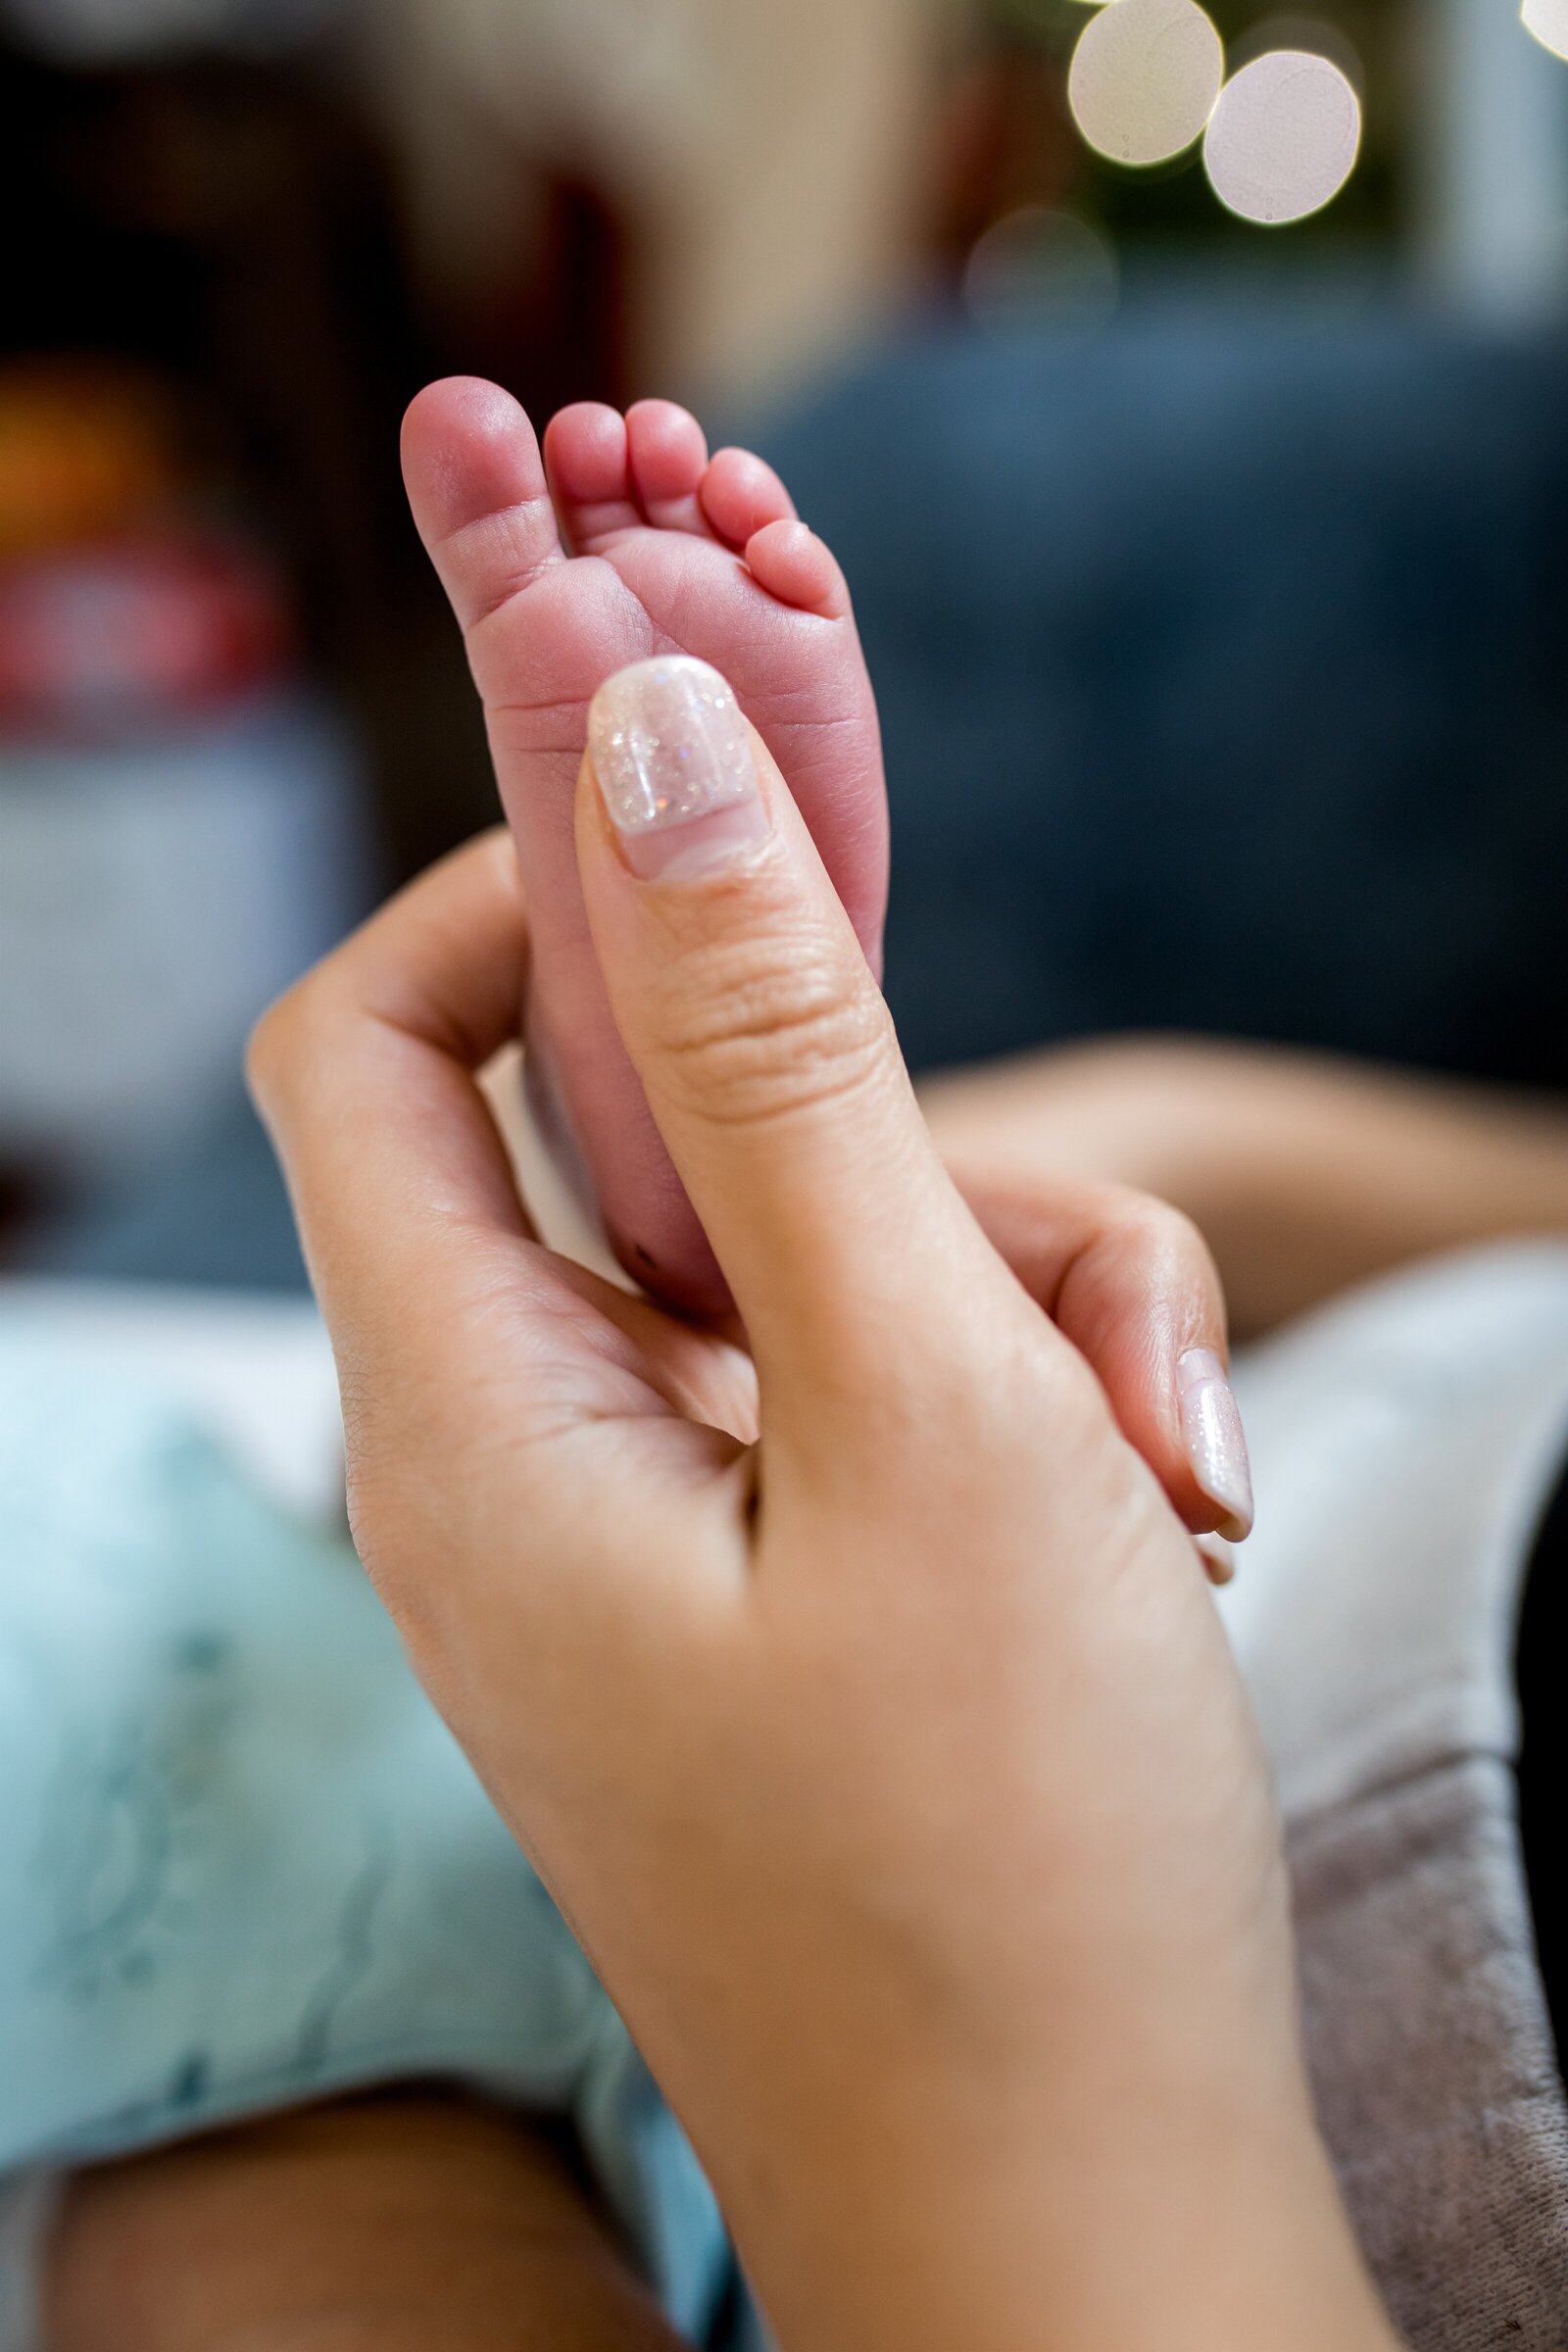 Newborn baby foot  with mom's  hand